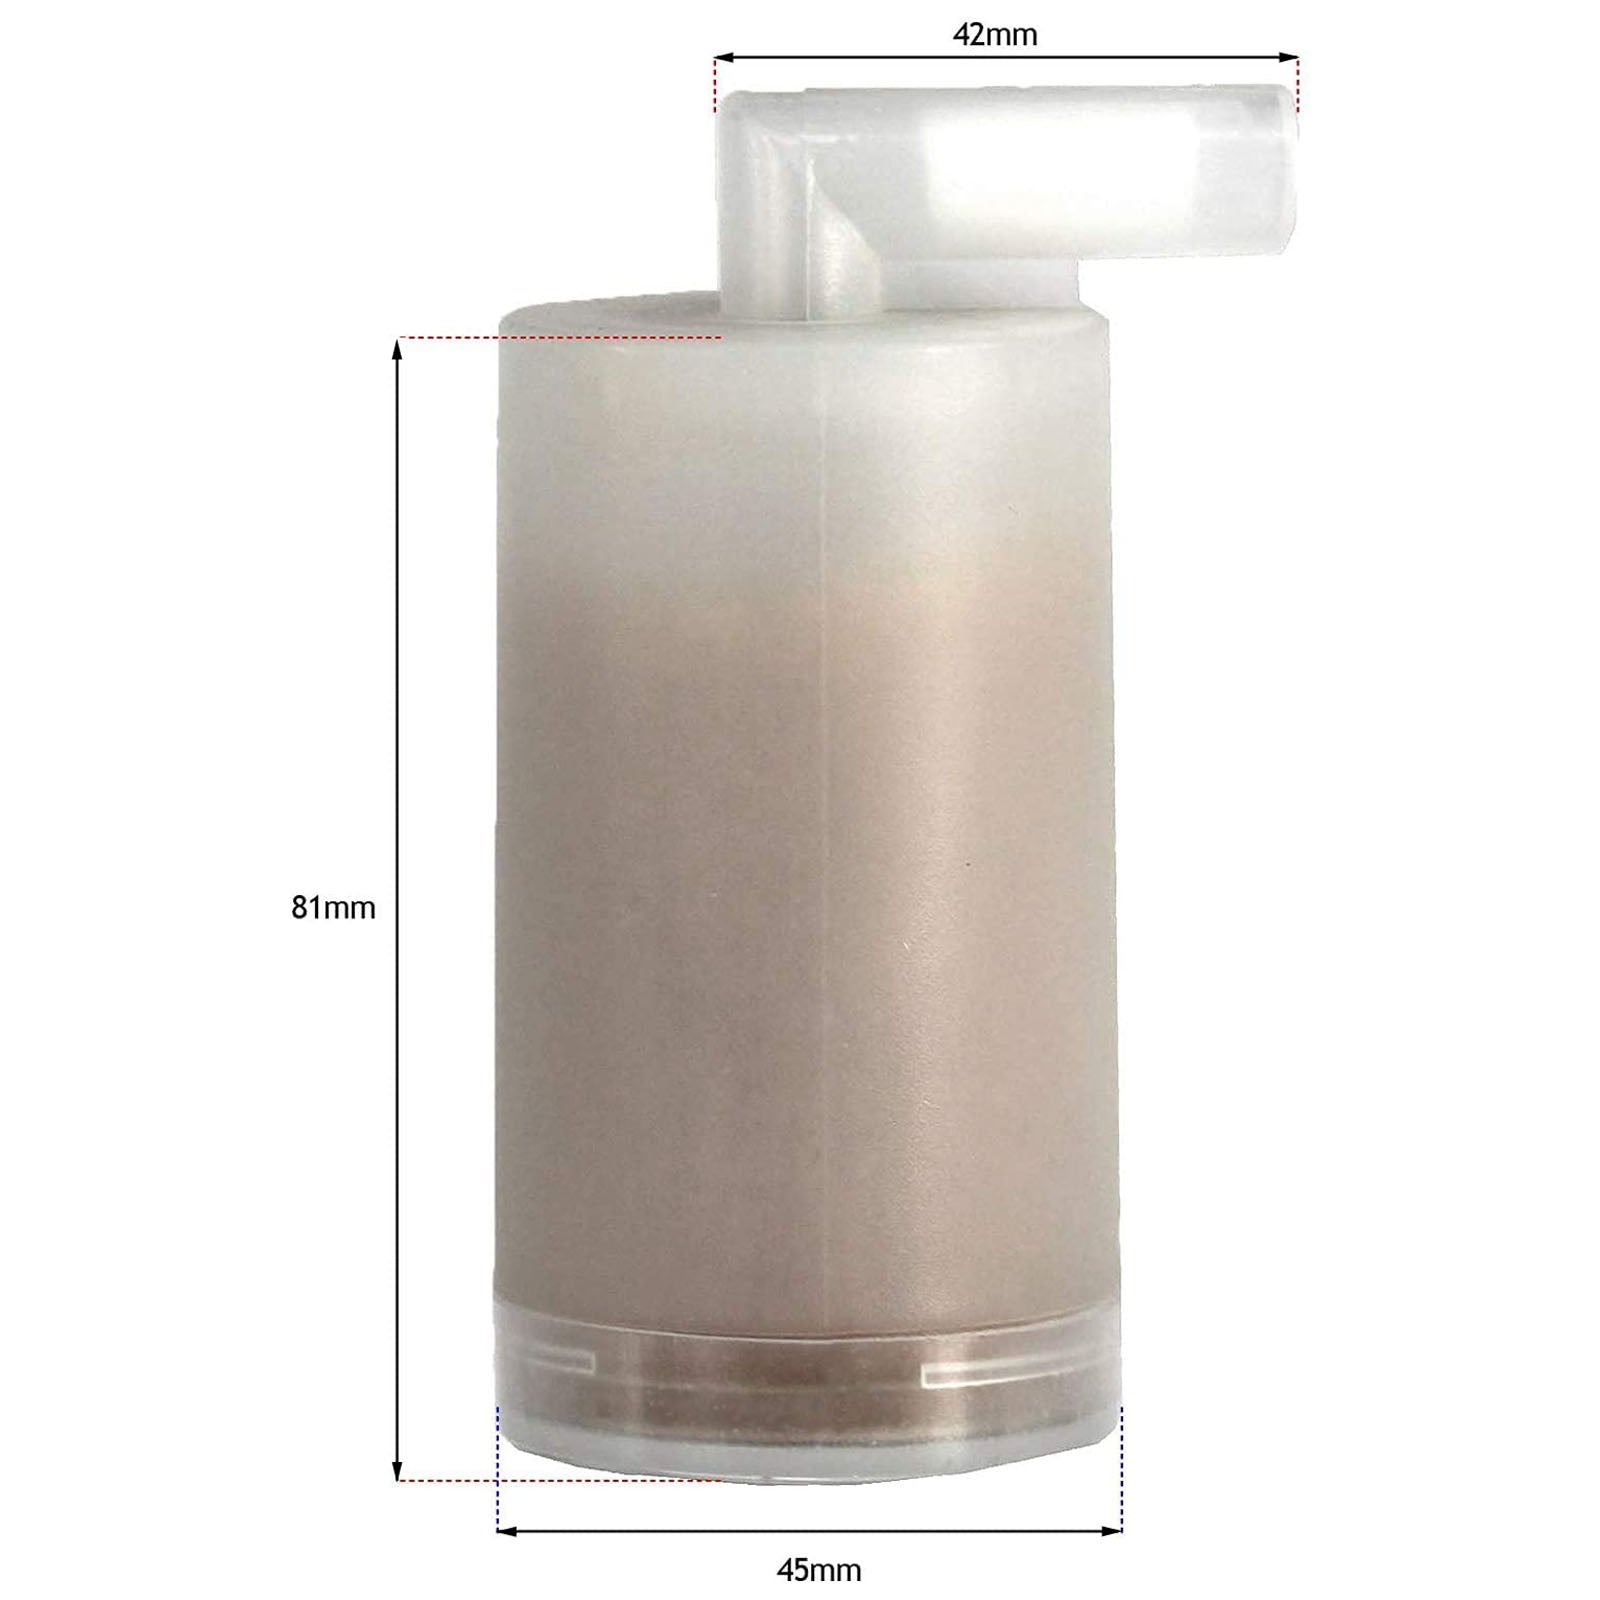 Anti Limescale Calcium Filter Cartridge for BUSH Steam Iron